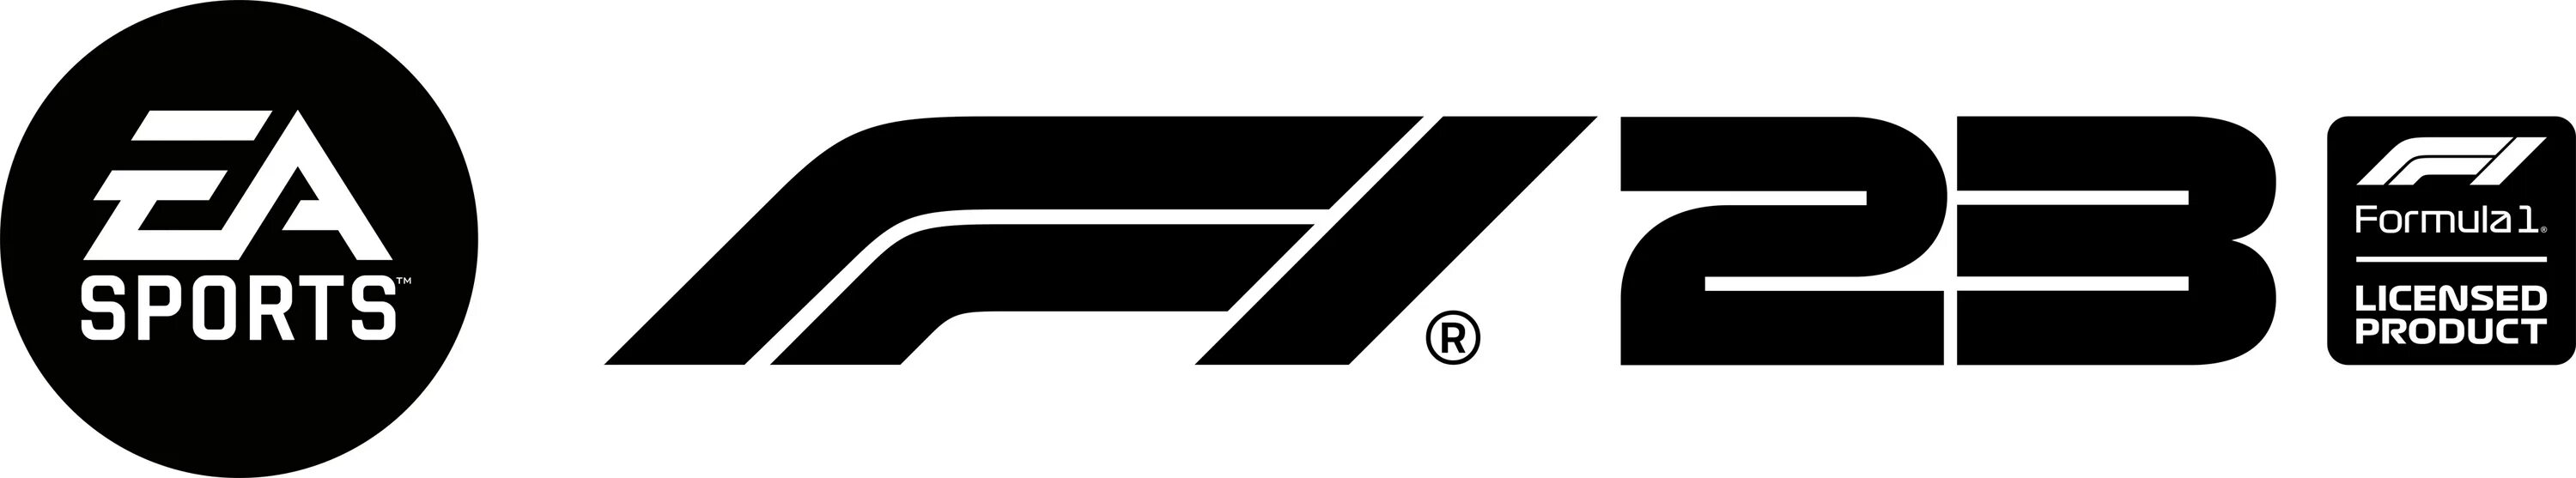 Формула 1 логотип. EA Sports f1 22 логотип. Знак формулы 1. F1 22 ярлык. 22 01 2023